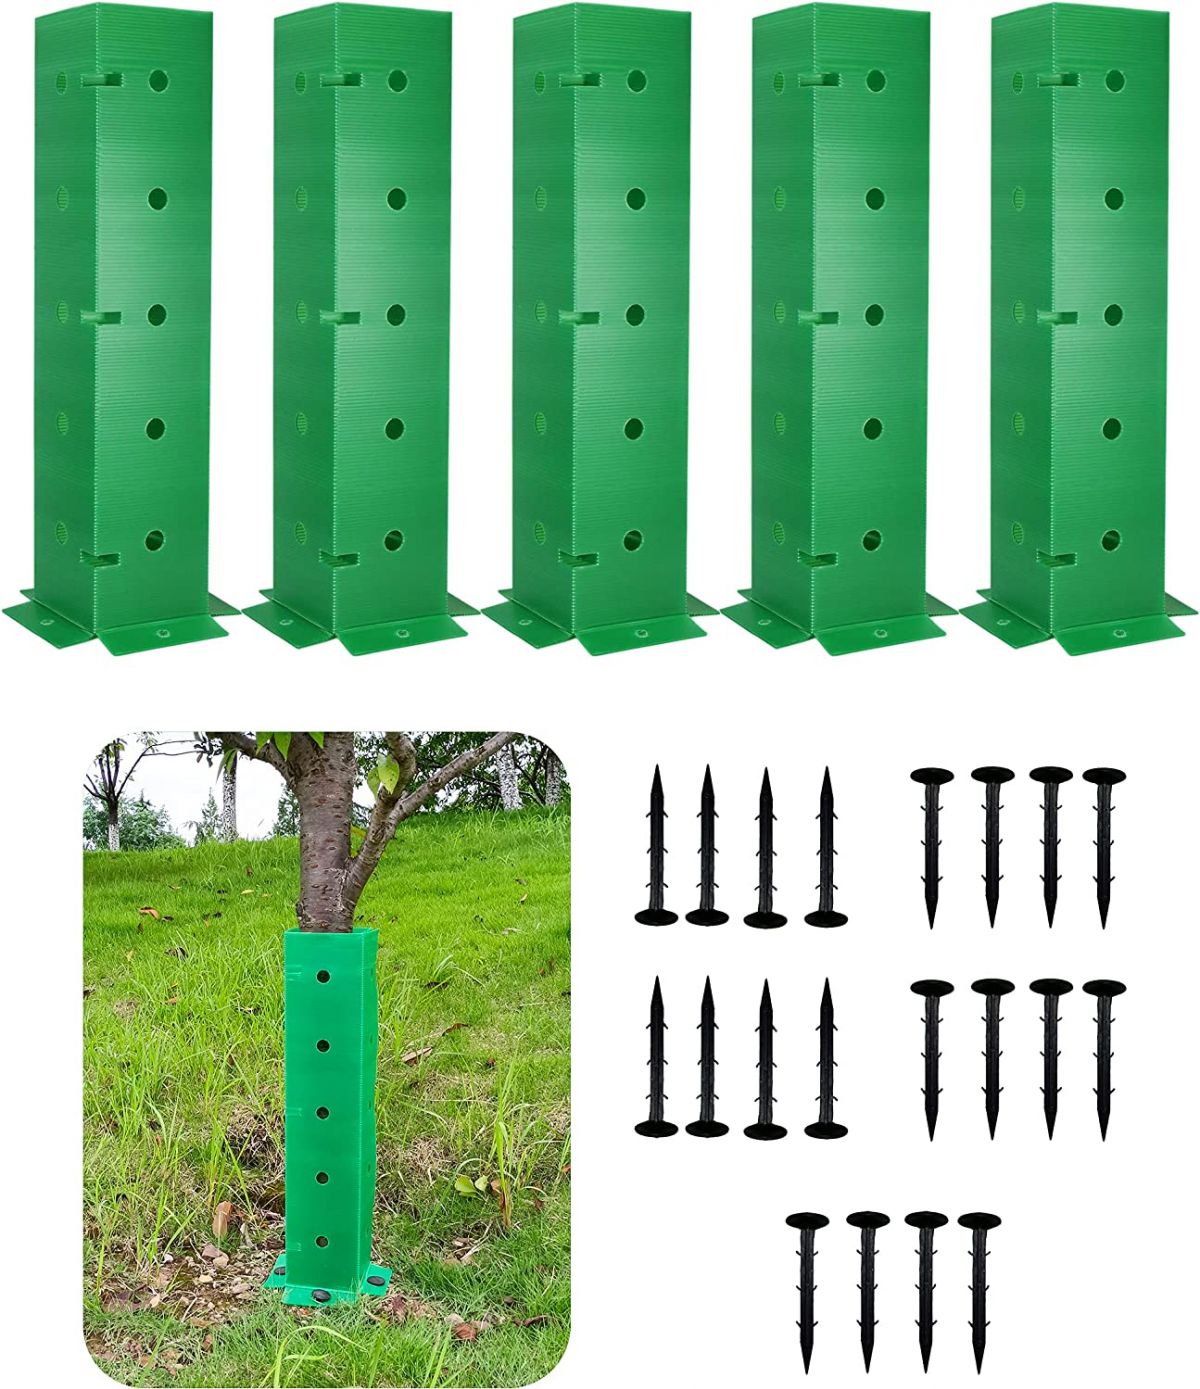 Superb Symbols Tree protection 114 cm high, diameter 12 cm – 5 pcs.